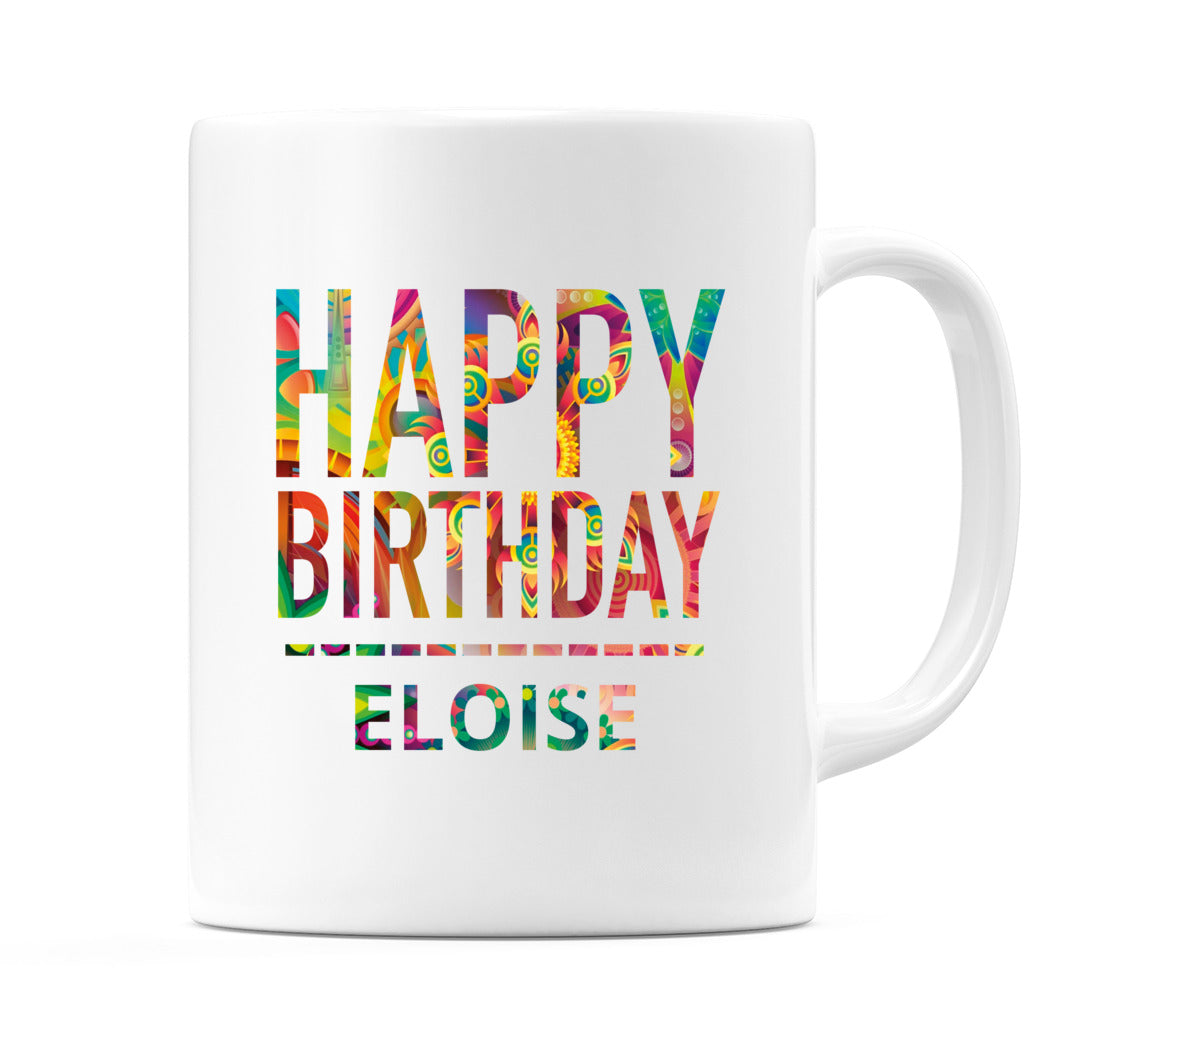 Happy Birthday Eloise (Tie Dye Effect) Mug Cup by WeDoMugs